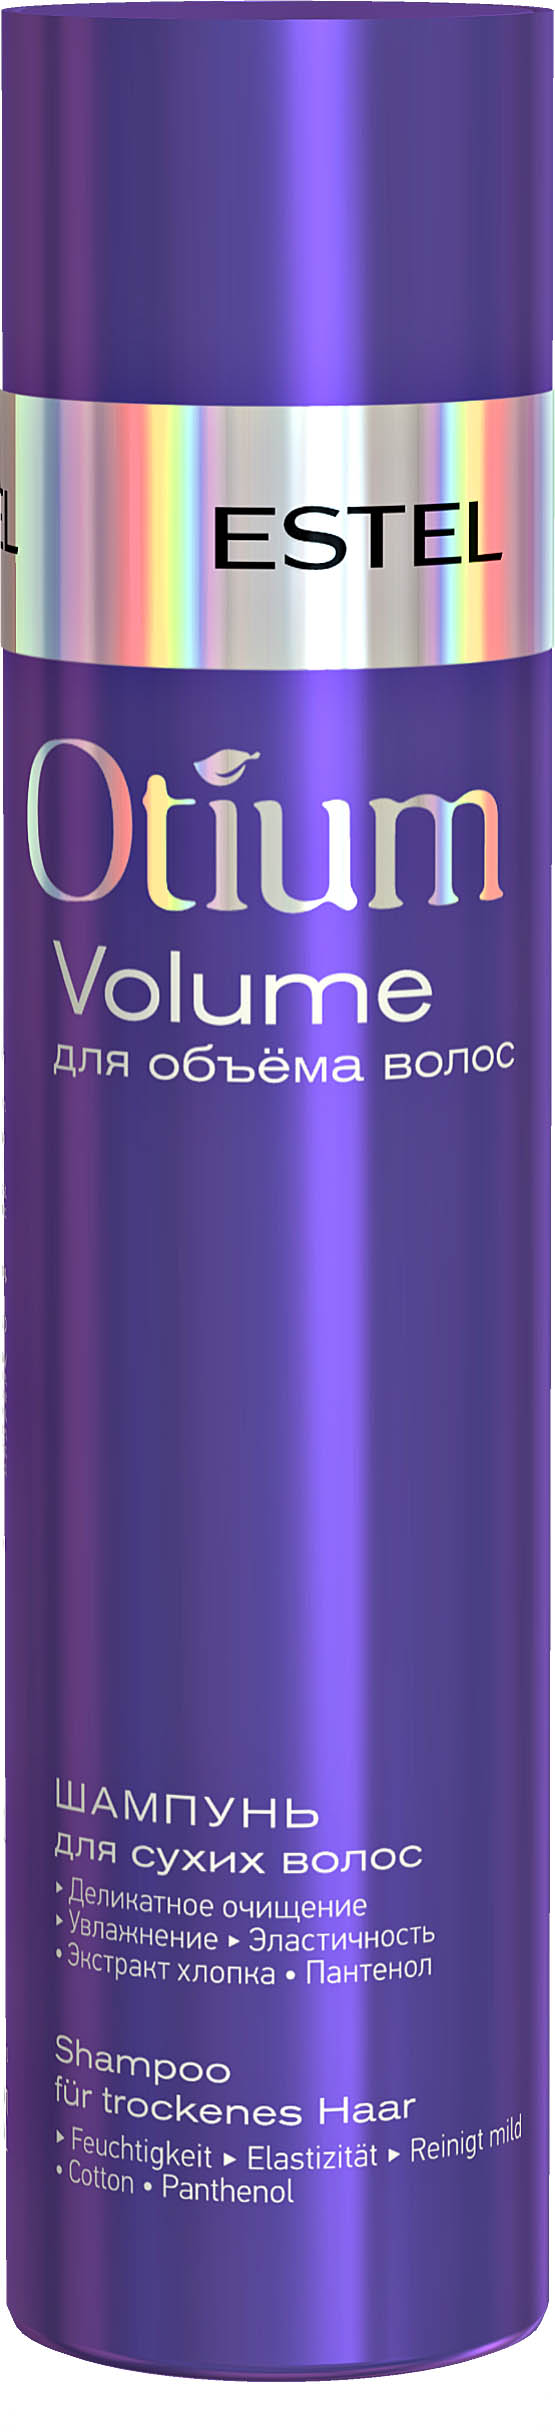 Шампунь для объёма сухих волос OTIUM VOLUME, 250 мл OTM.21